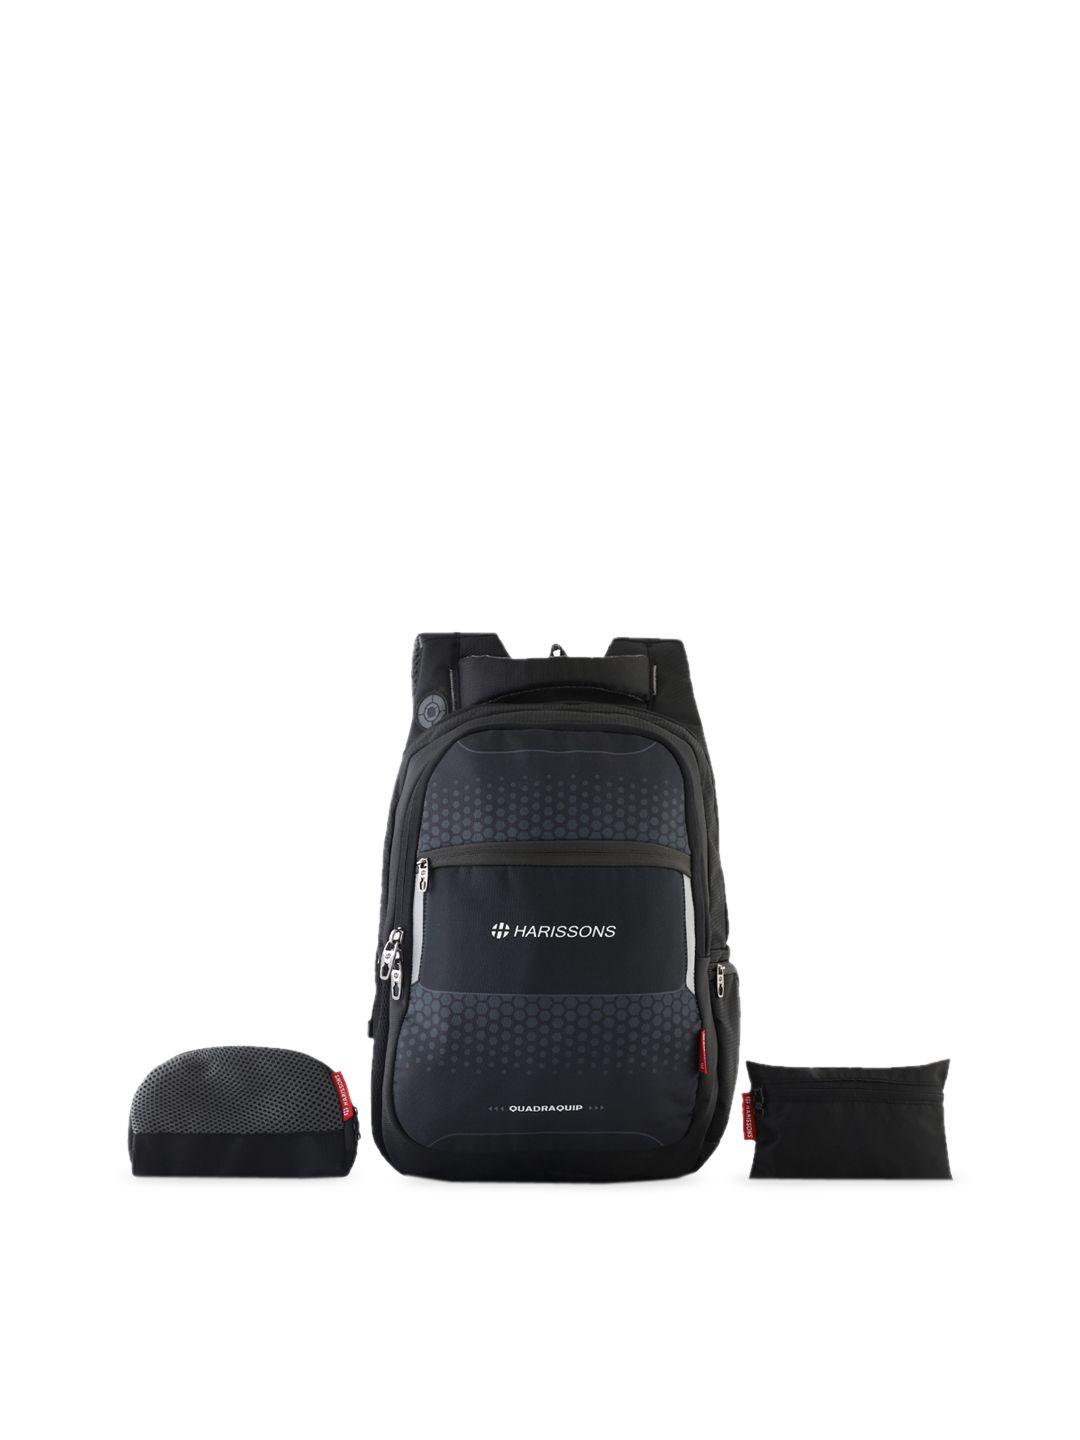 harissons unisex black geometric embellished with reflective strip backpack